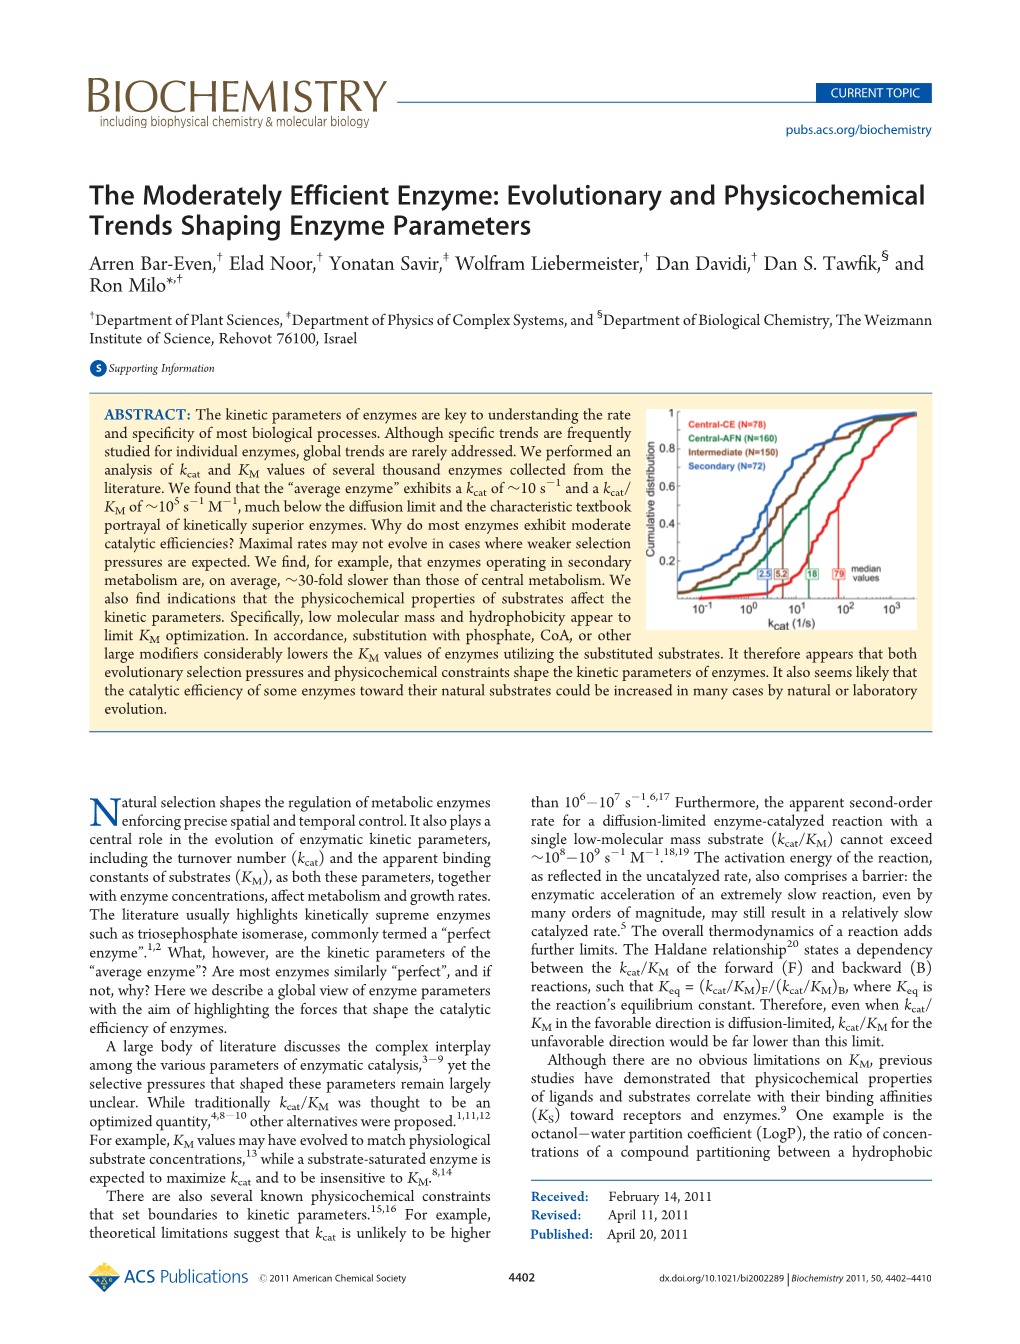 Evolutionary and Physicochemical Trends Shaping Enzyme Parameters Arren Bar-Even,† Elad Noor,† Yonatan Savir,‡ Wolfram Liebermeister,† Dan Davidi,† Dan S